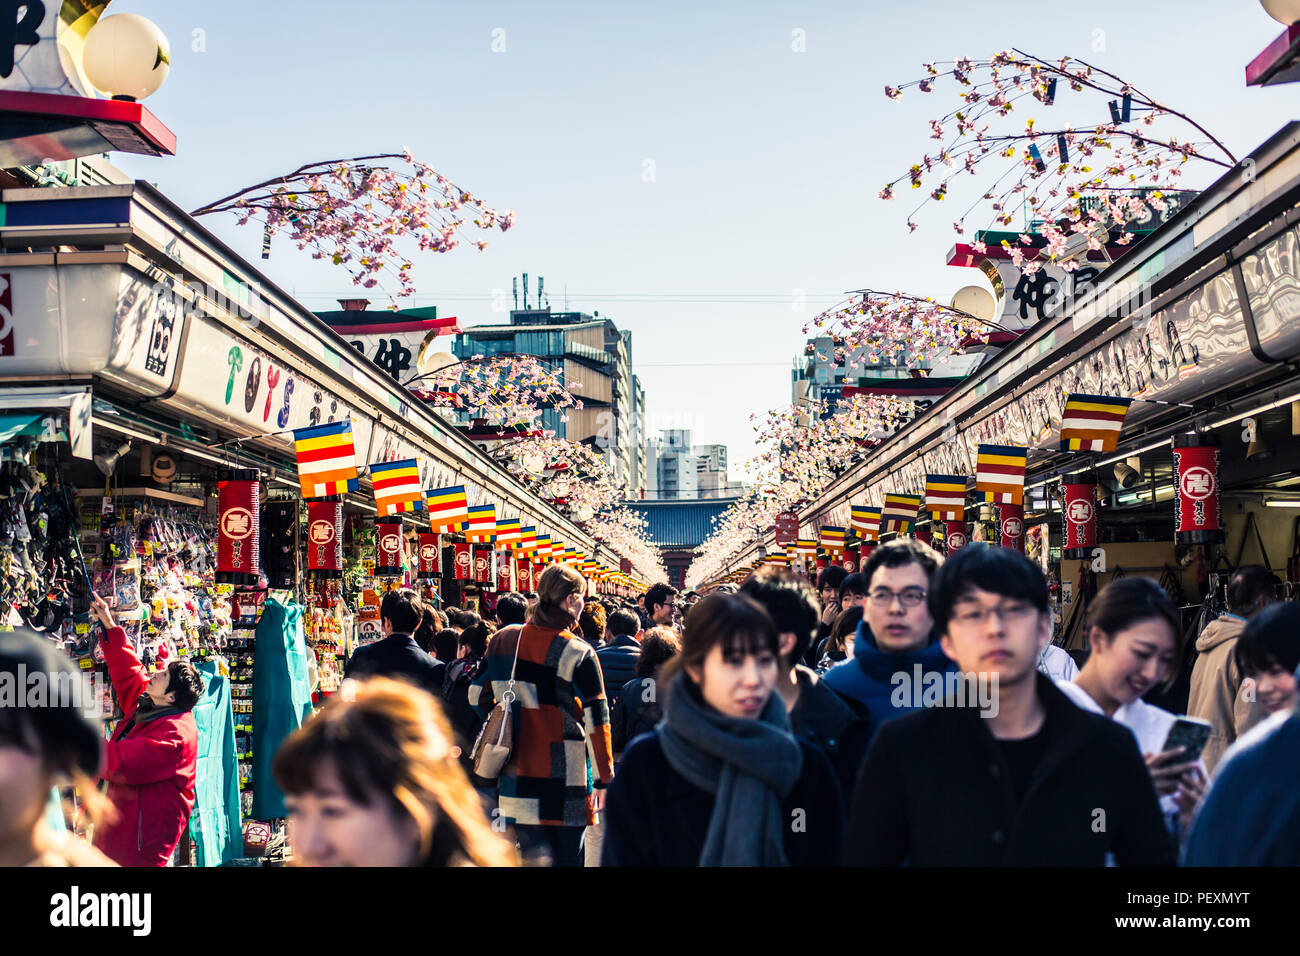 Street market in Asakusa near Senso-ji shrine in Tokyo, Japan Stock Photo